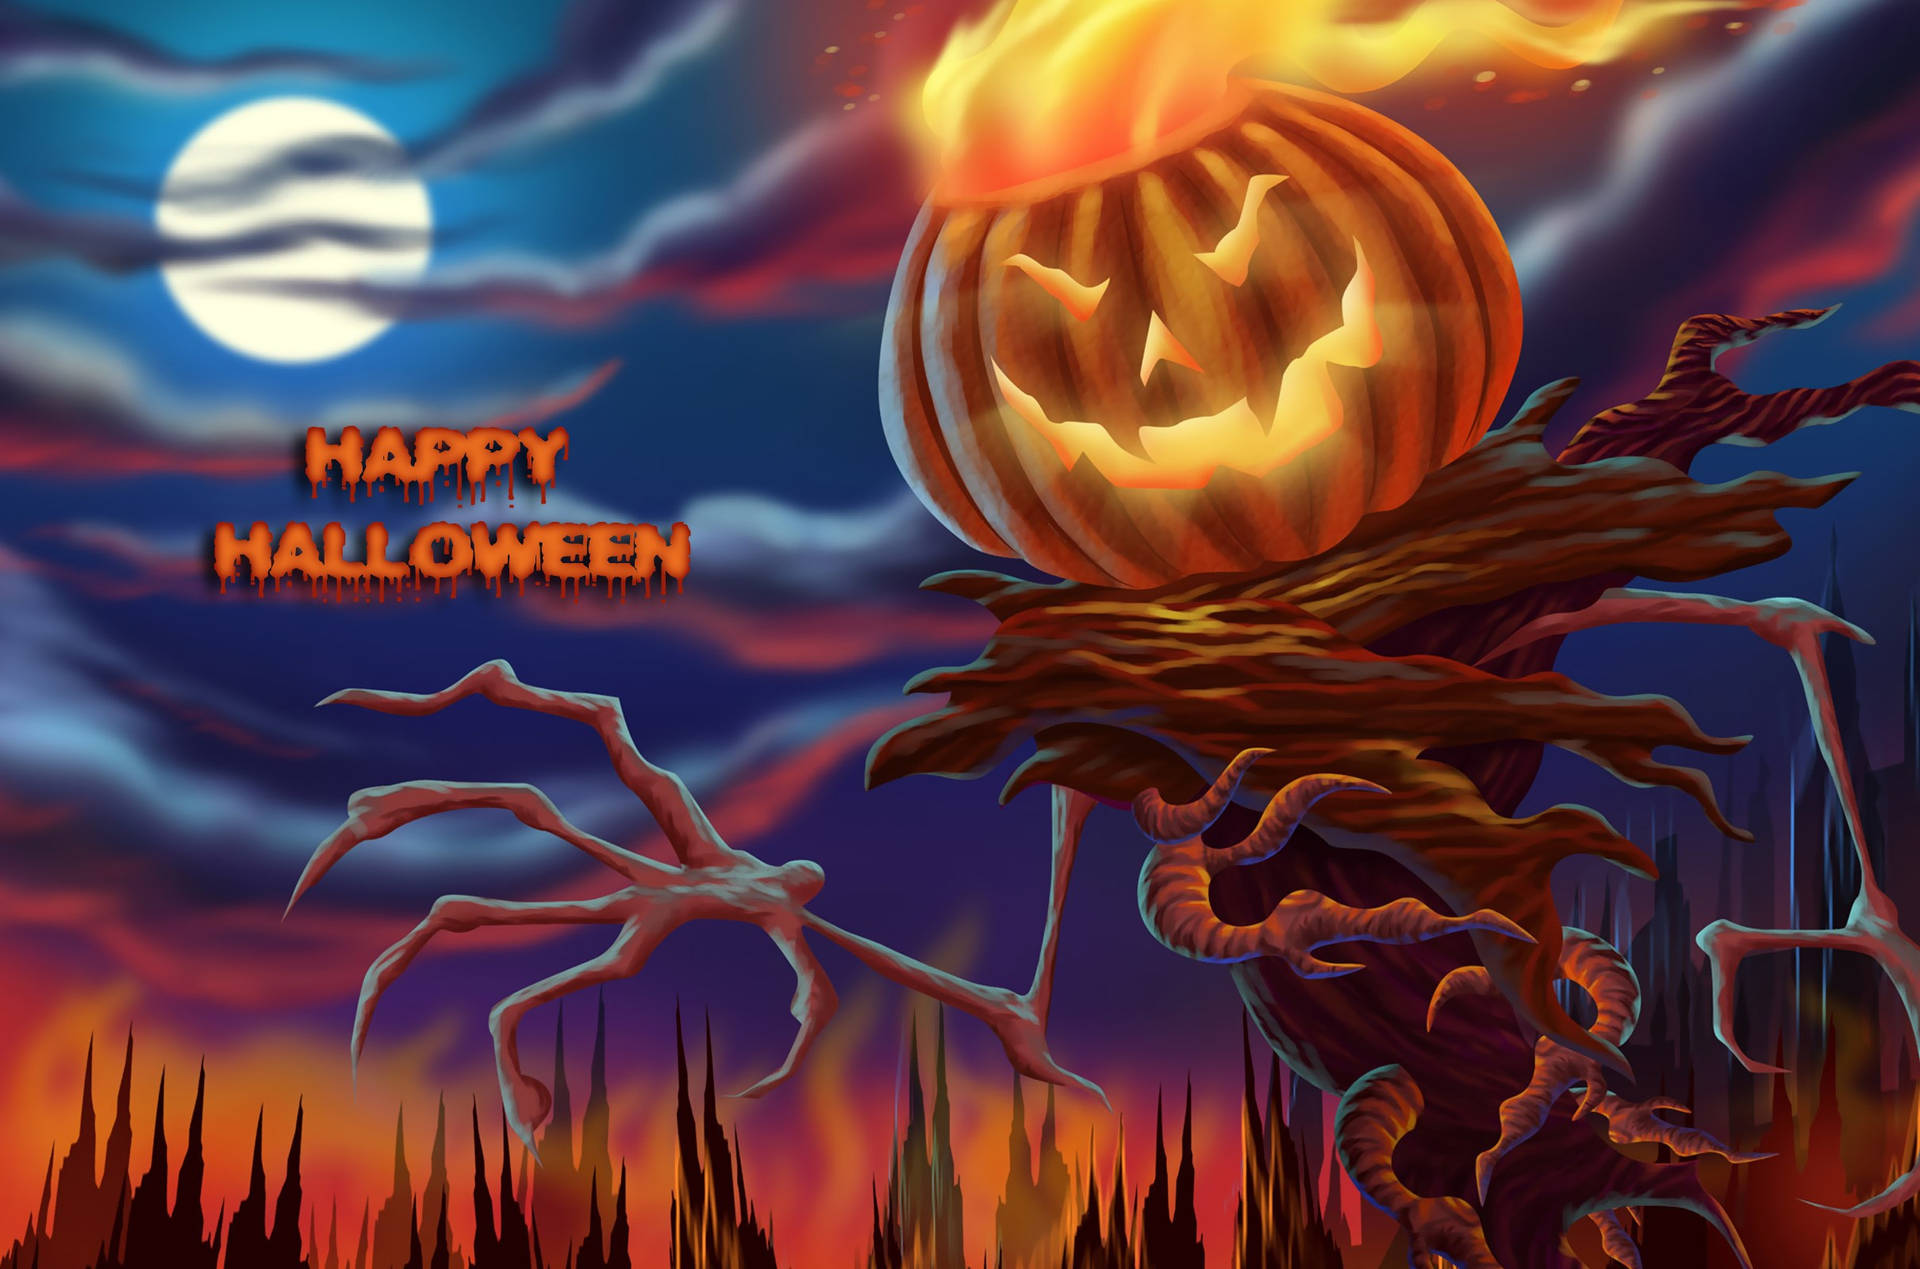 Have a Happy Halloween! Wallpaper